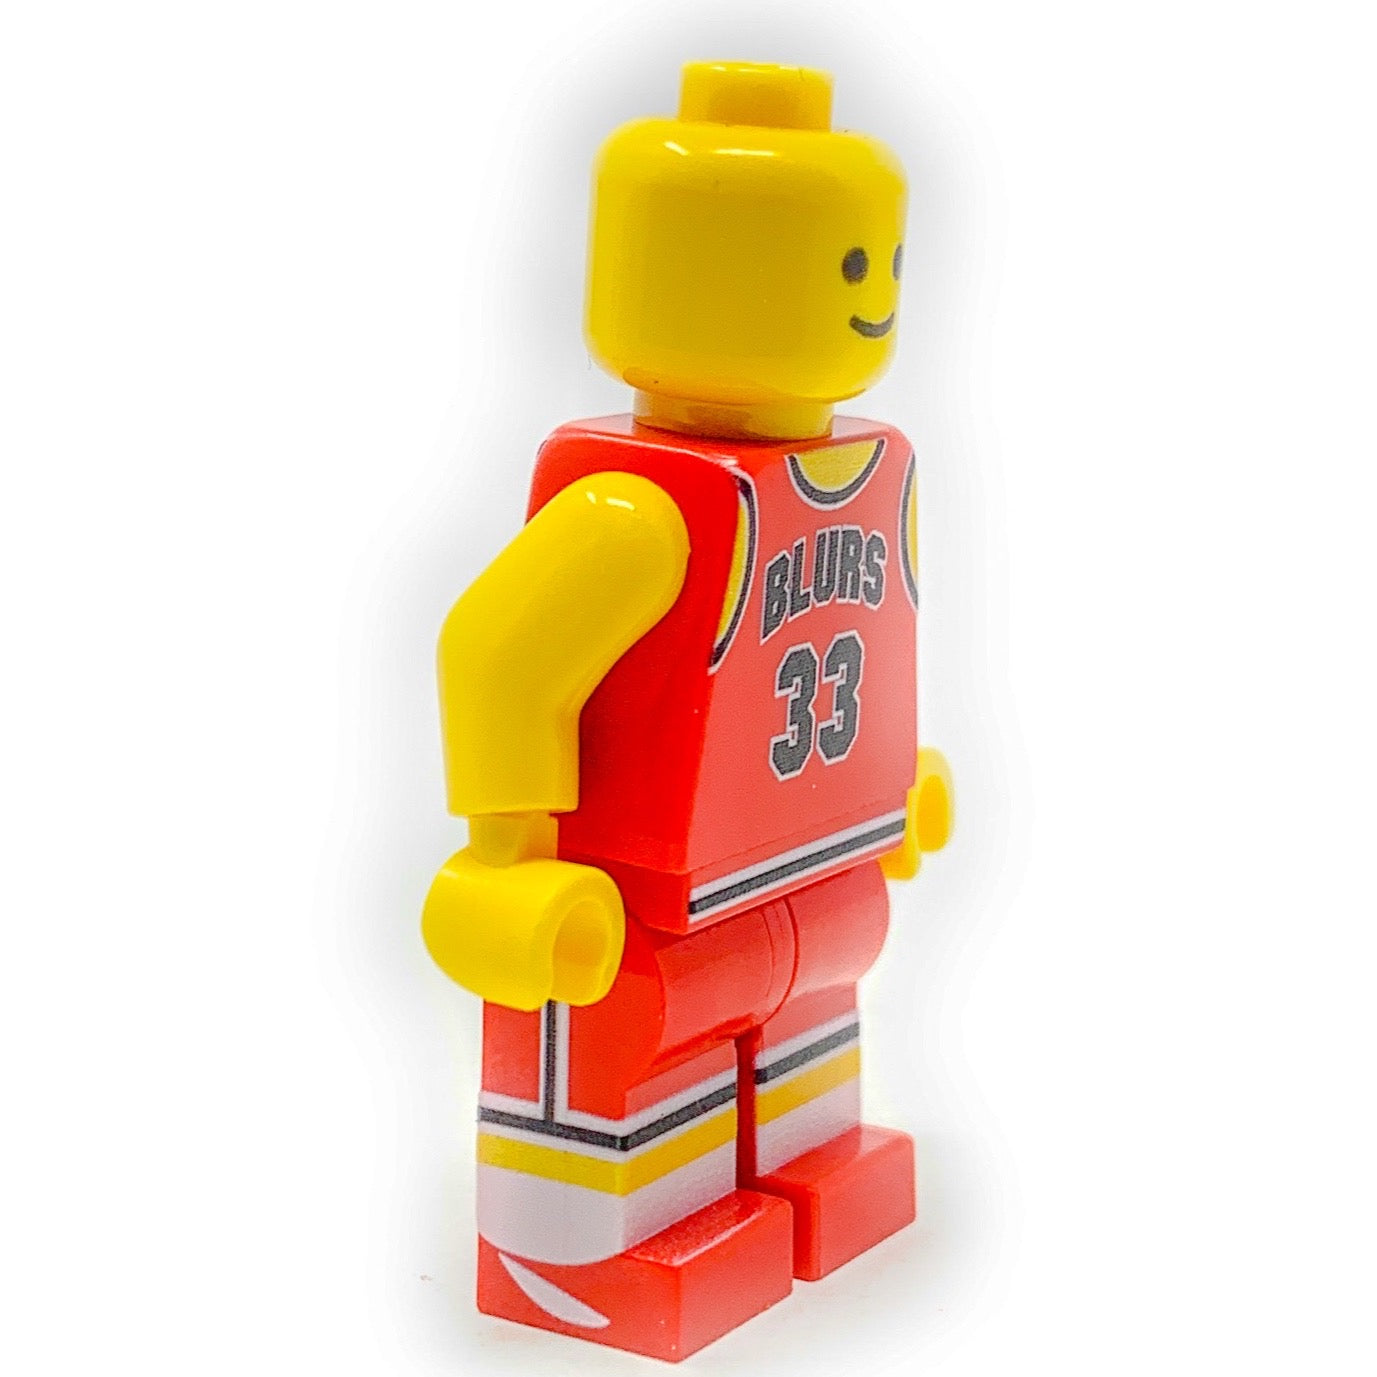 #33 Chicago Blurs - B3 Customs® Basketball Player Minifig